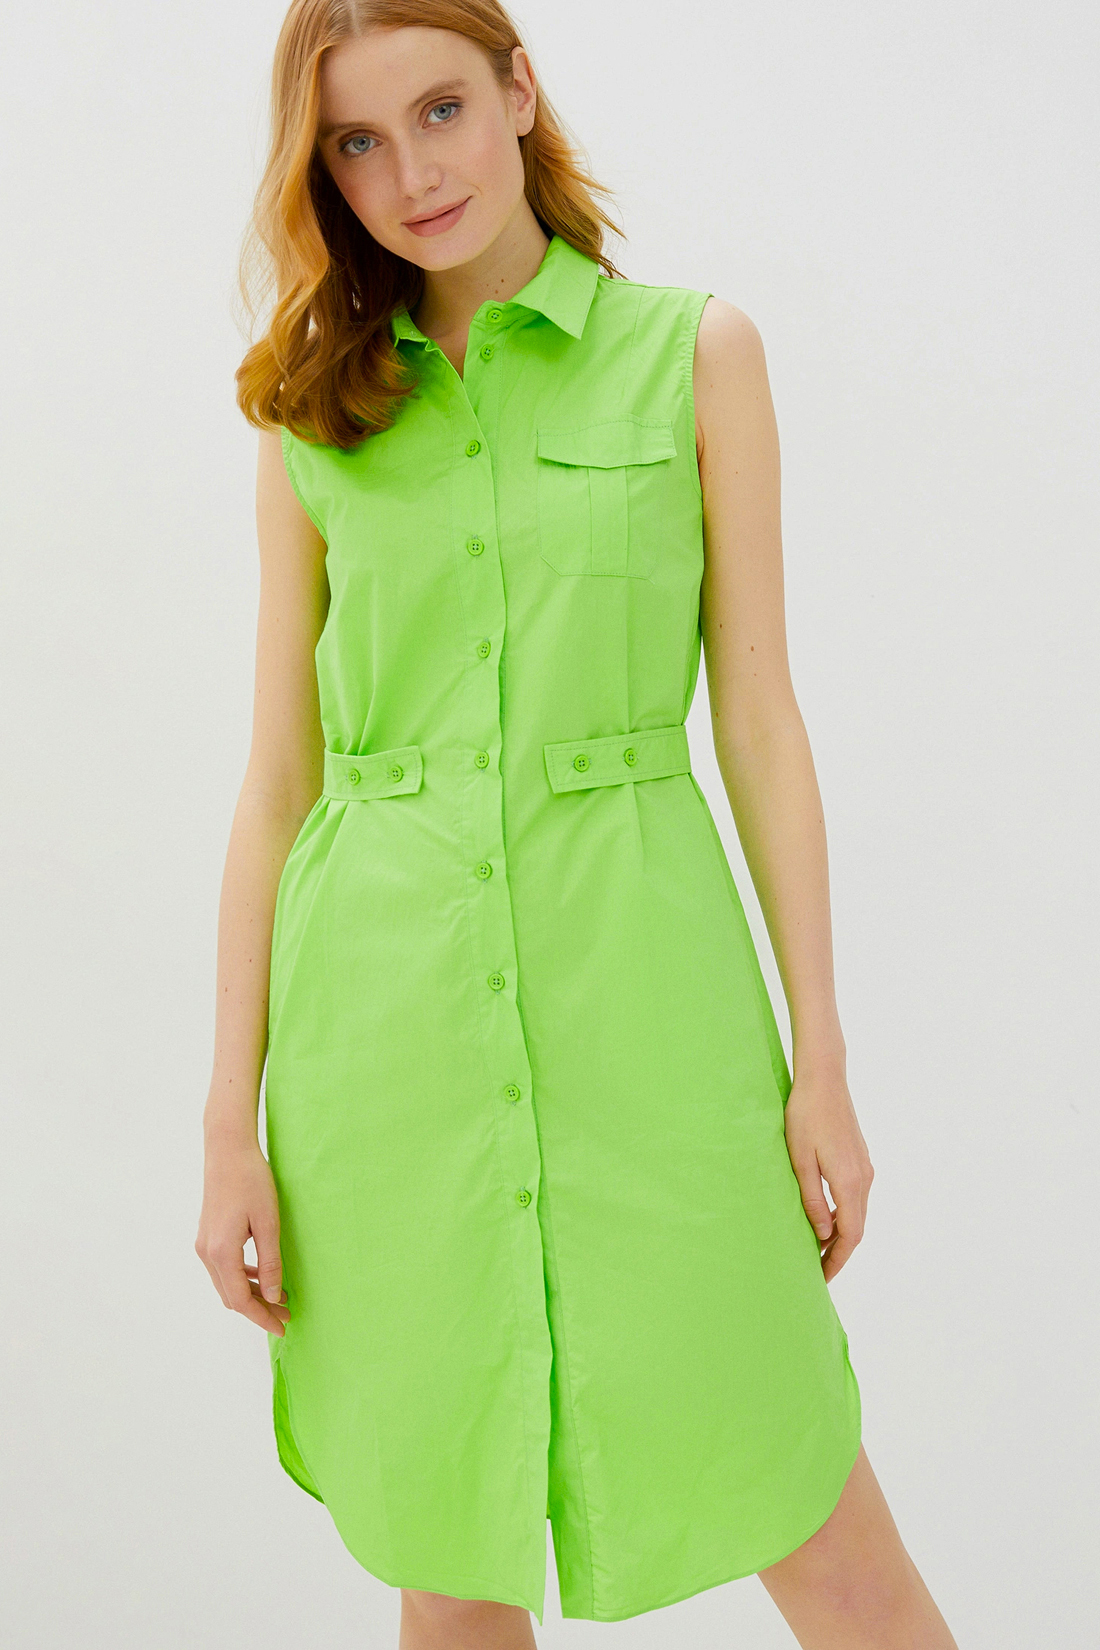 Платье-рубашка без рукавов (арт. baon B450059), размер M, цвет зеленый Платье-рубашка без рукавов (арт. baon B450059) - фото 4